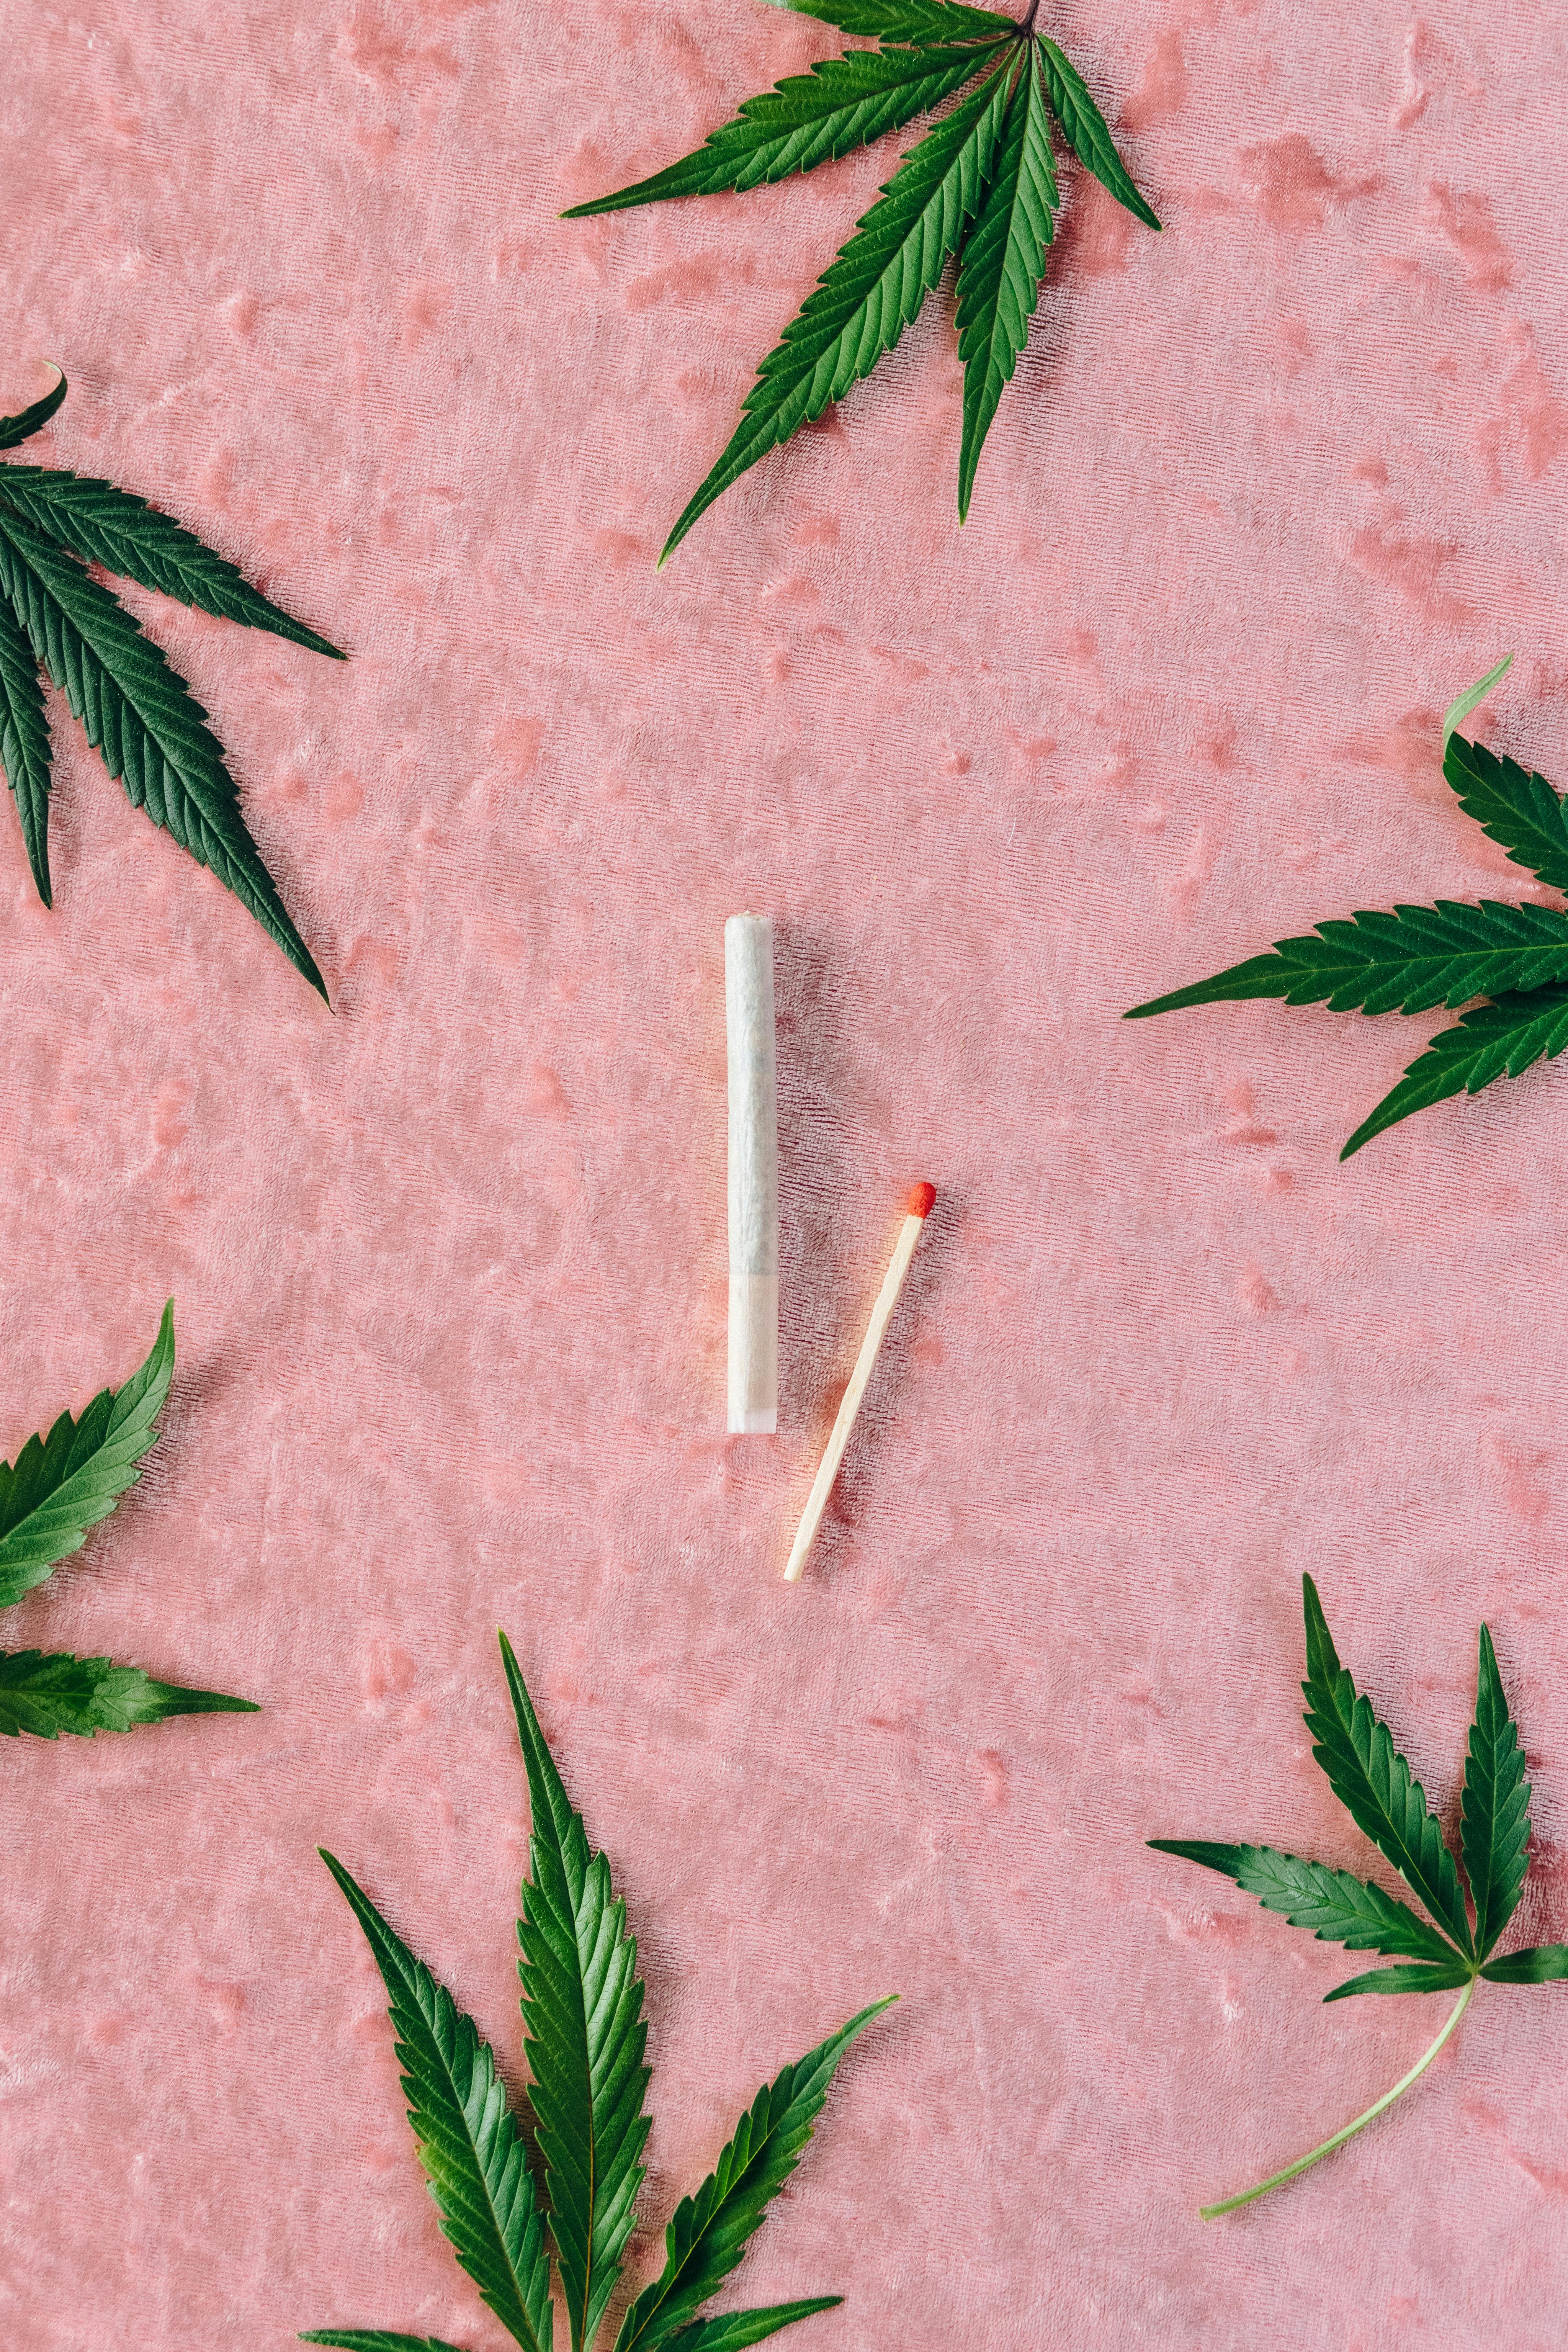 49+] Marijuana Bud Wallpaper - WallpaperSafari